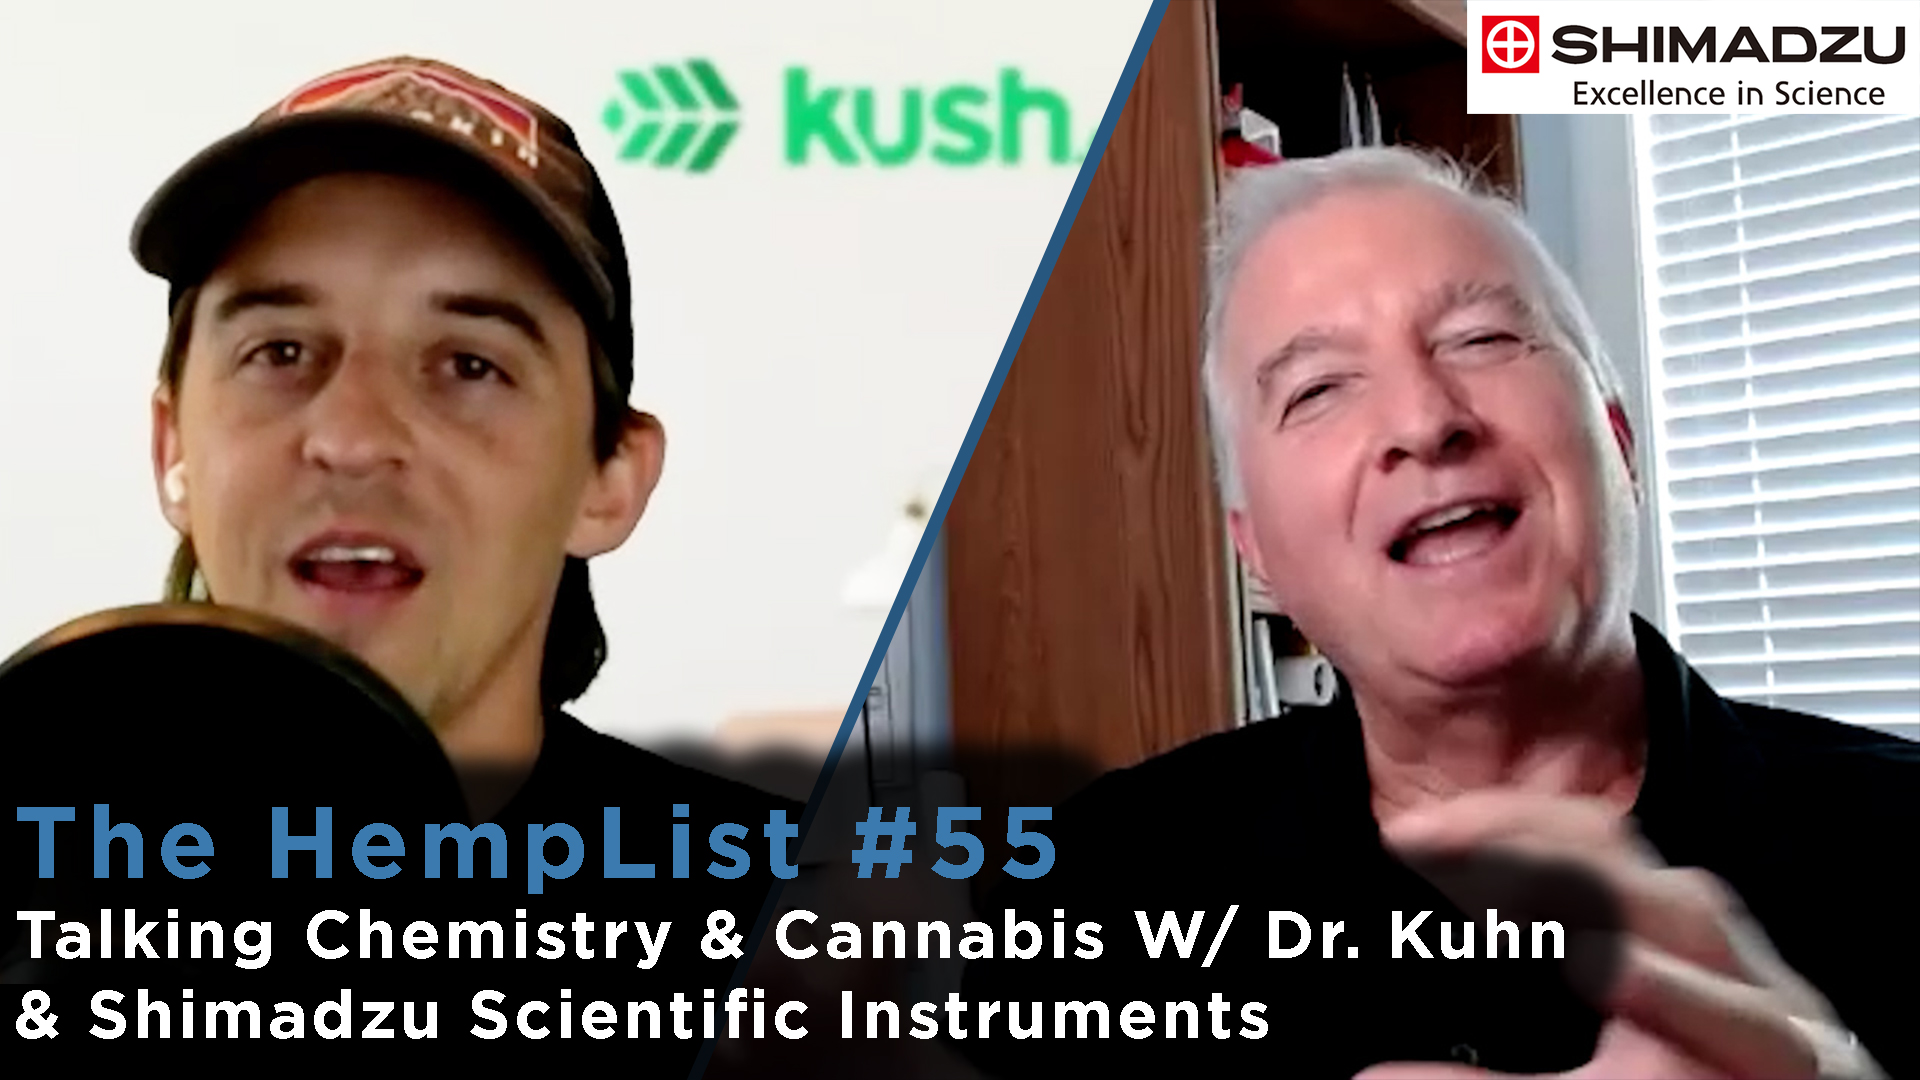 Discussing Chemistry, Testing Equipment & Cannabis W/ Dr. Kuhn from Shimadzu Scientific Instruments |The HempList #55|